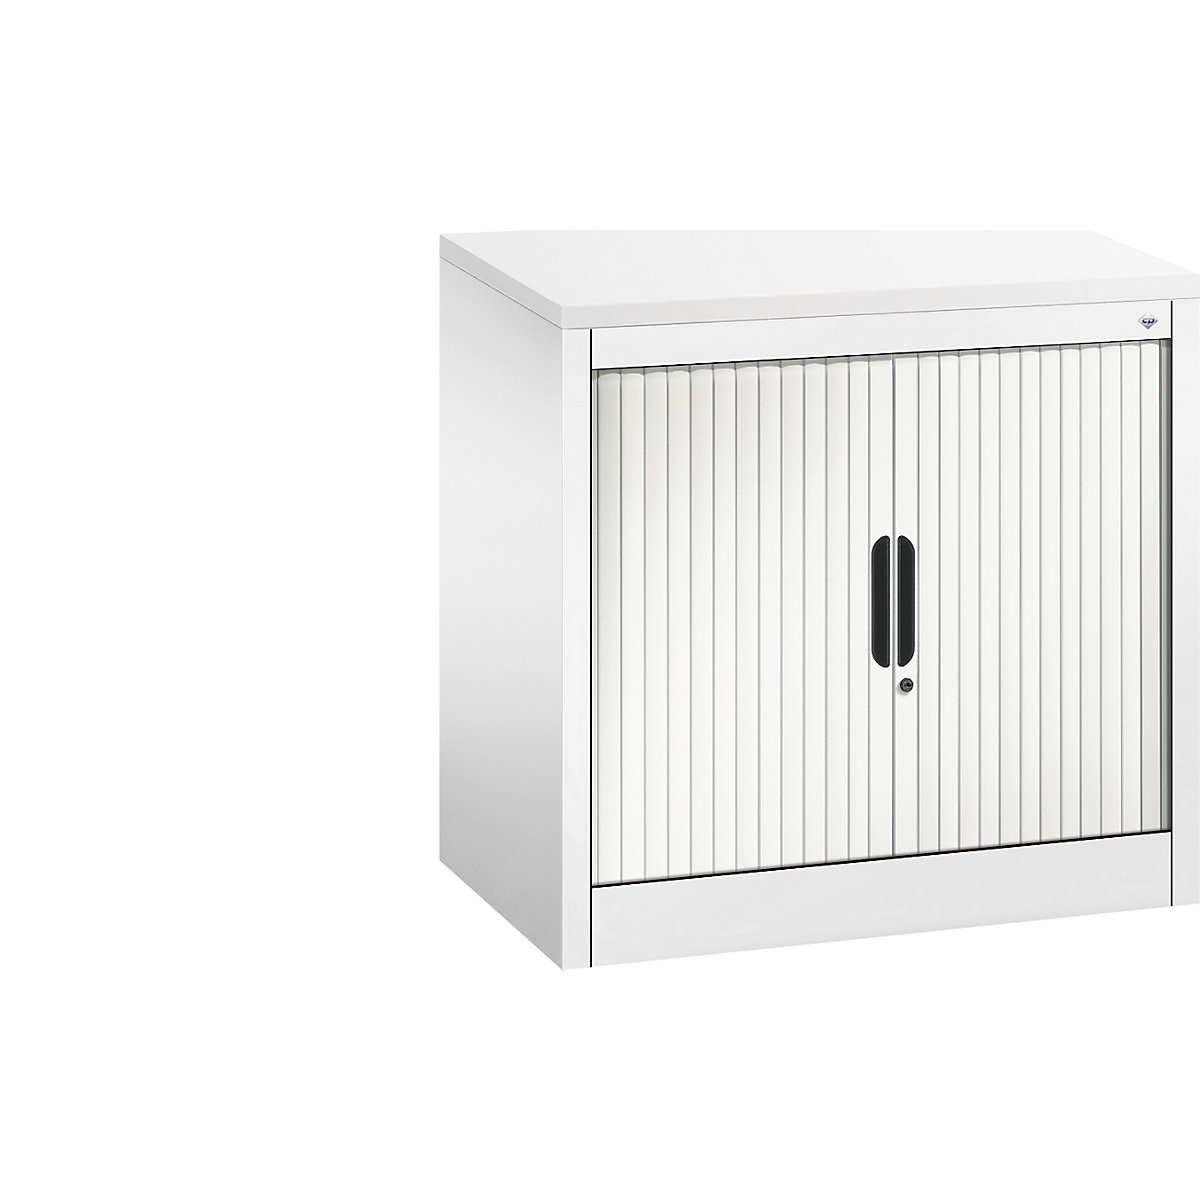 Roller shutter cupboard with horizontal shutter – C+P, HxWxD 720 x 800 x 420 mm, 1 shelf, 1.5 file heights, traffic white-5